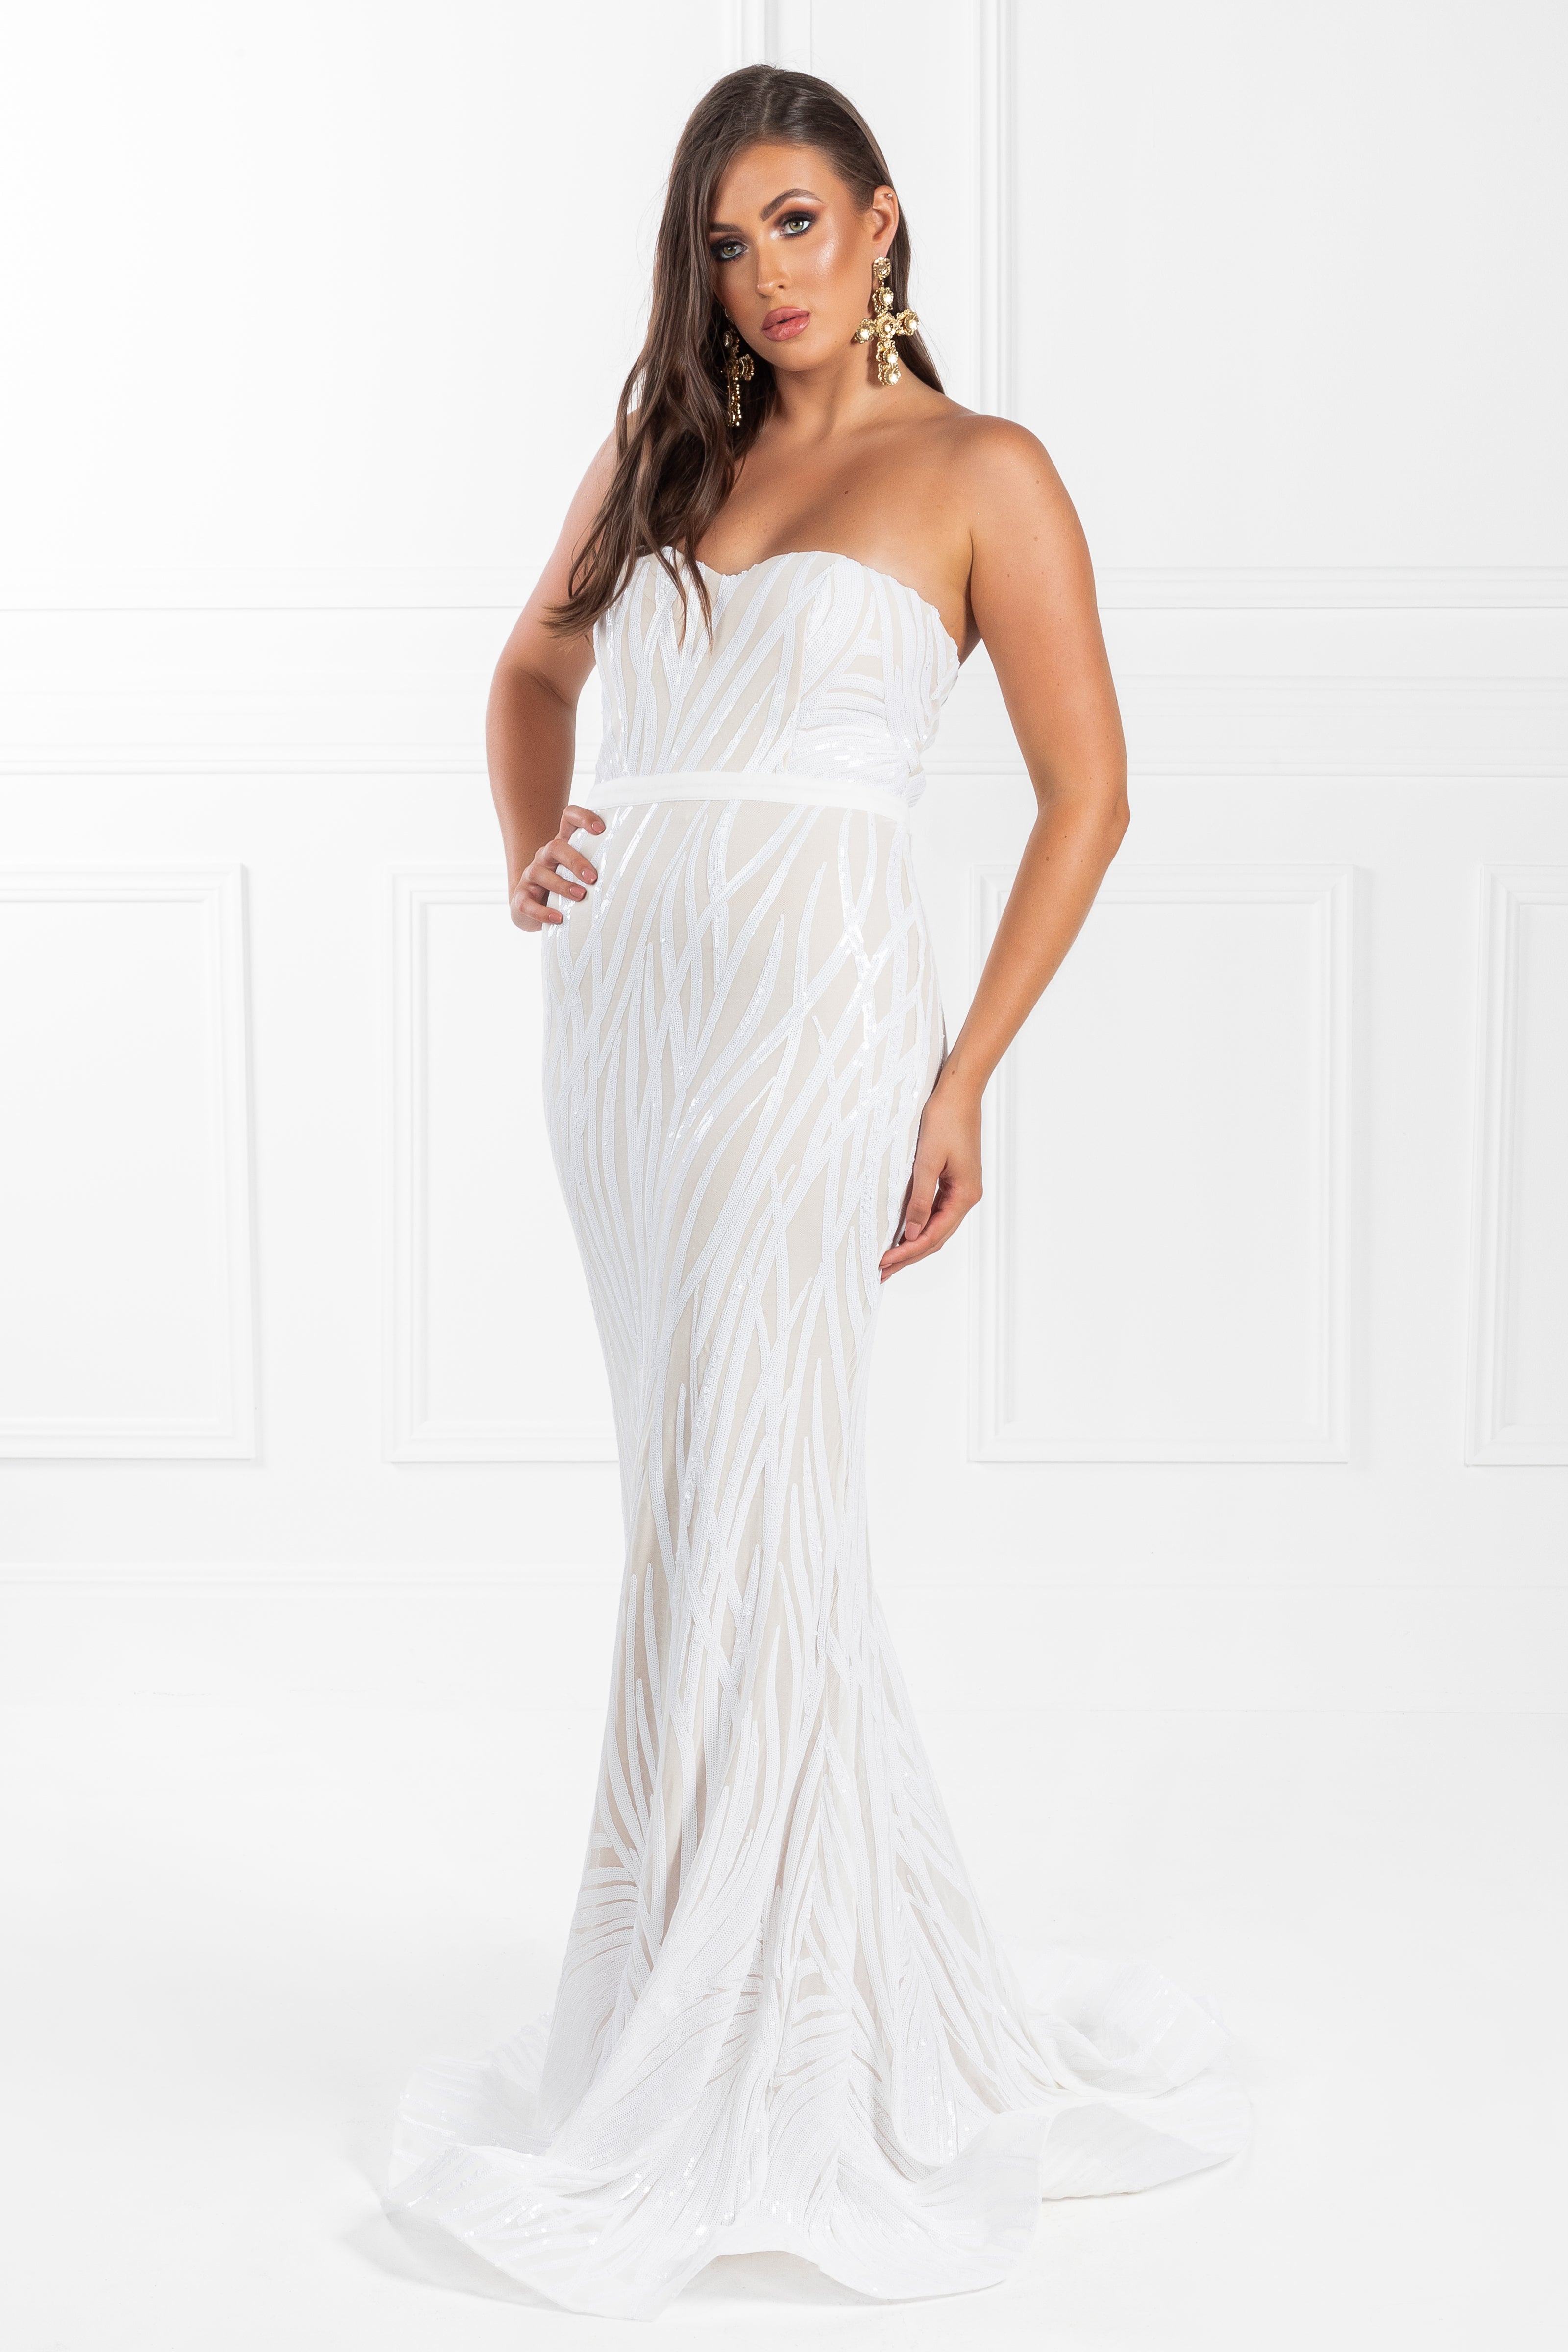 Honey Couture EVITA White Nude Strapless Sequin Wedding Formal Dress